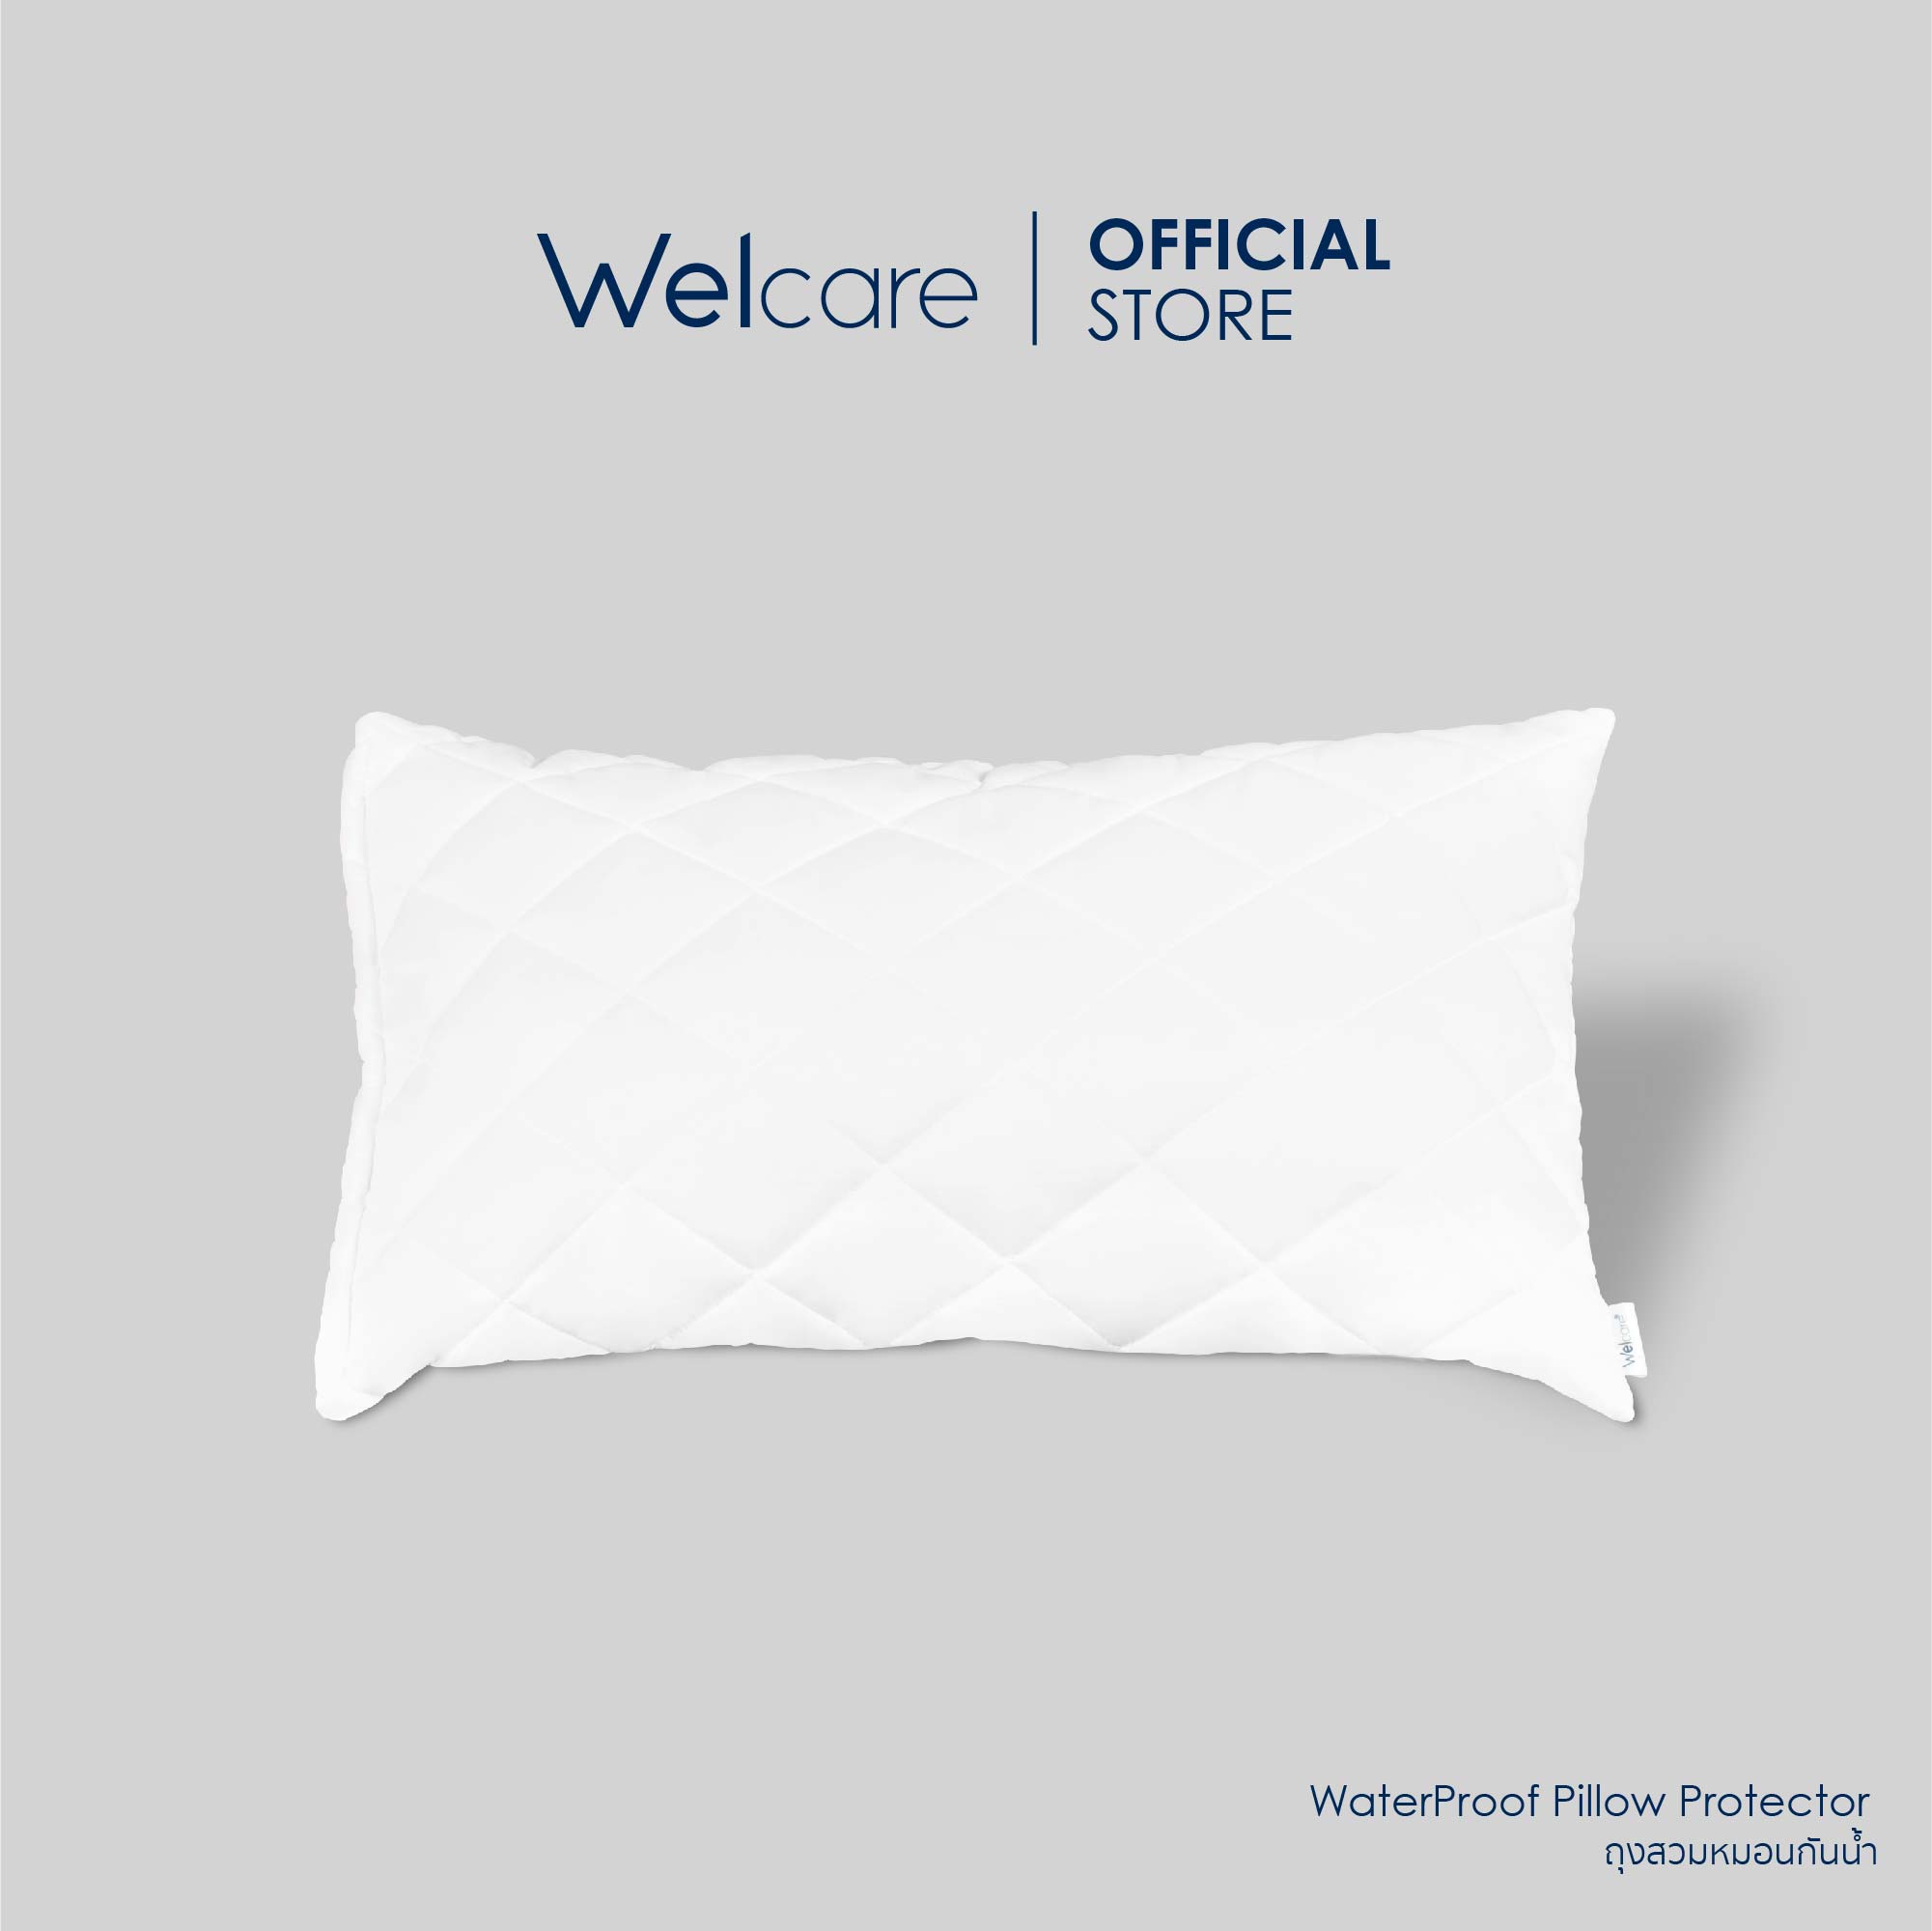 Welcare ถุงสวมหมอนกันน้ำ Pillow Protector waterproof